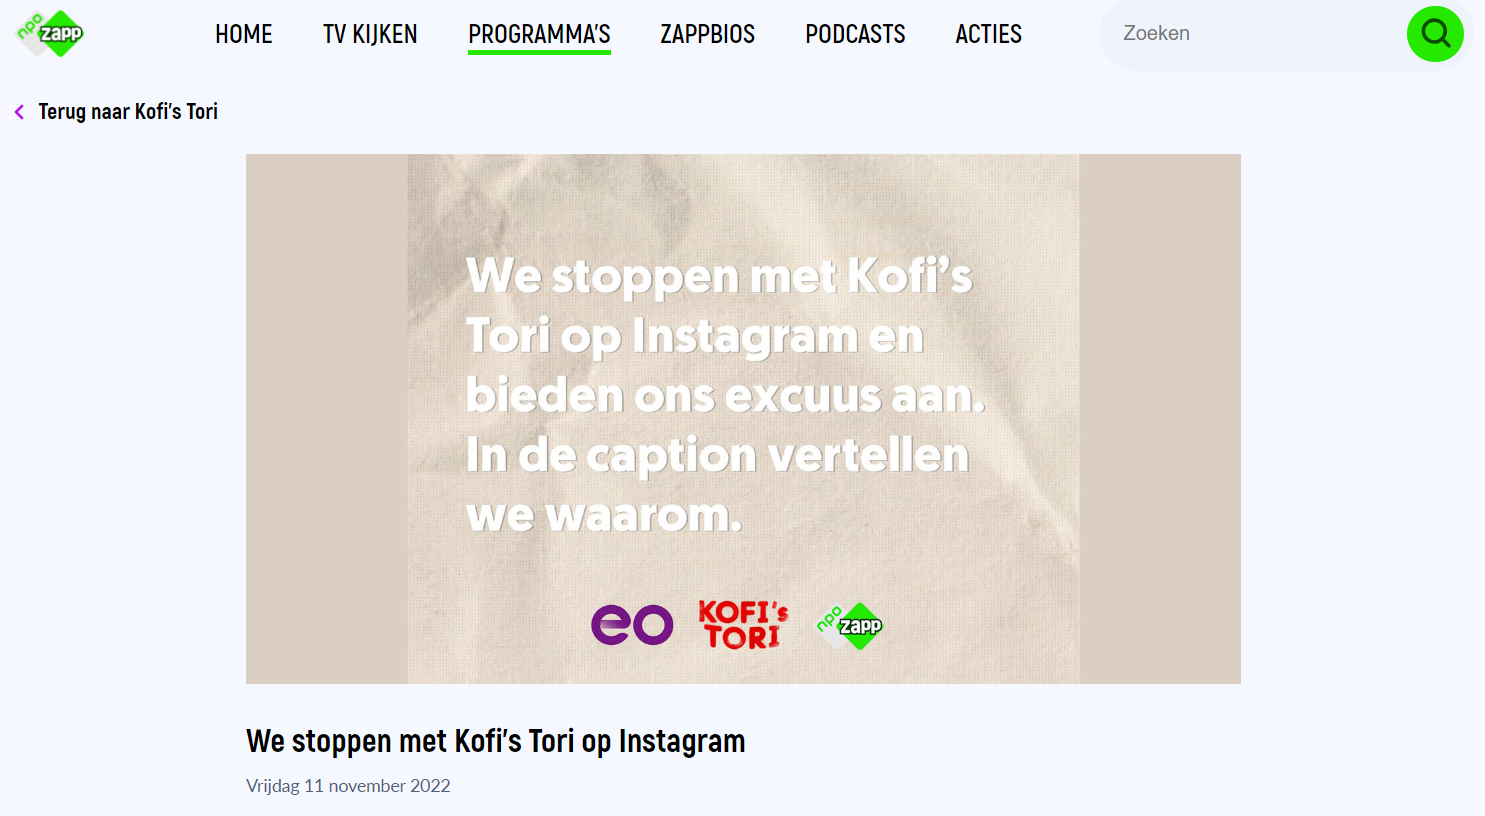 EO biedt excuses aan over jeugdserie Kofi's Tori 